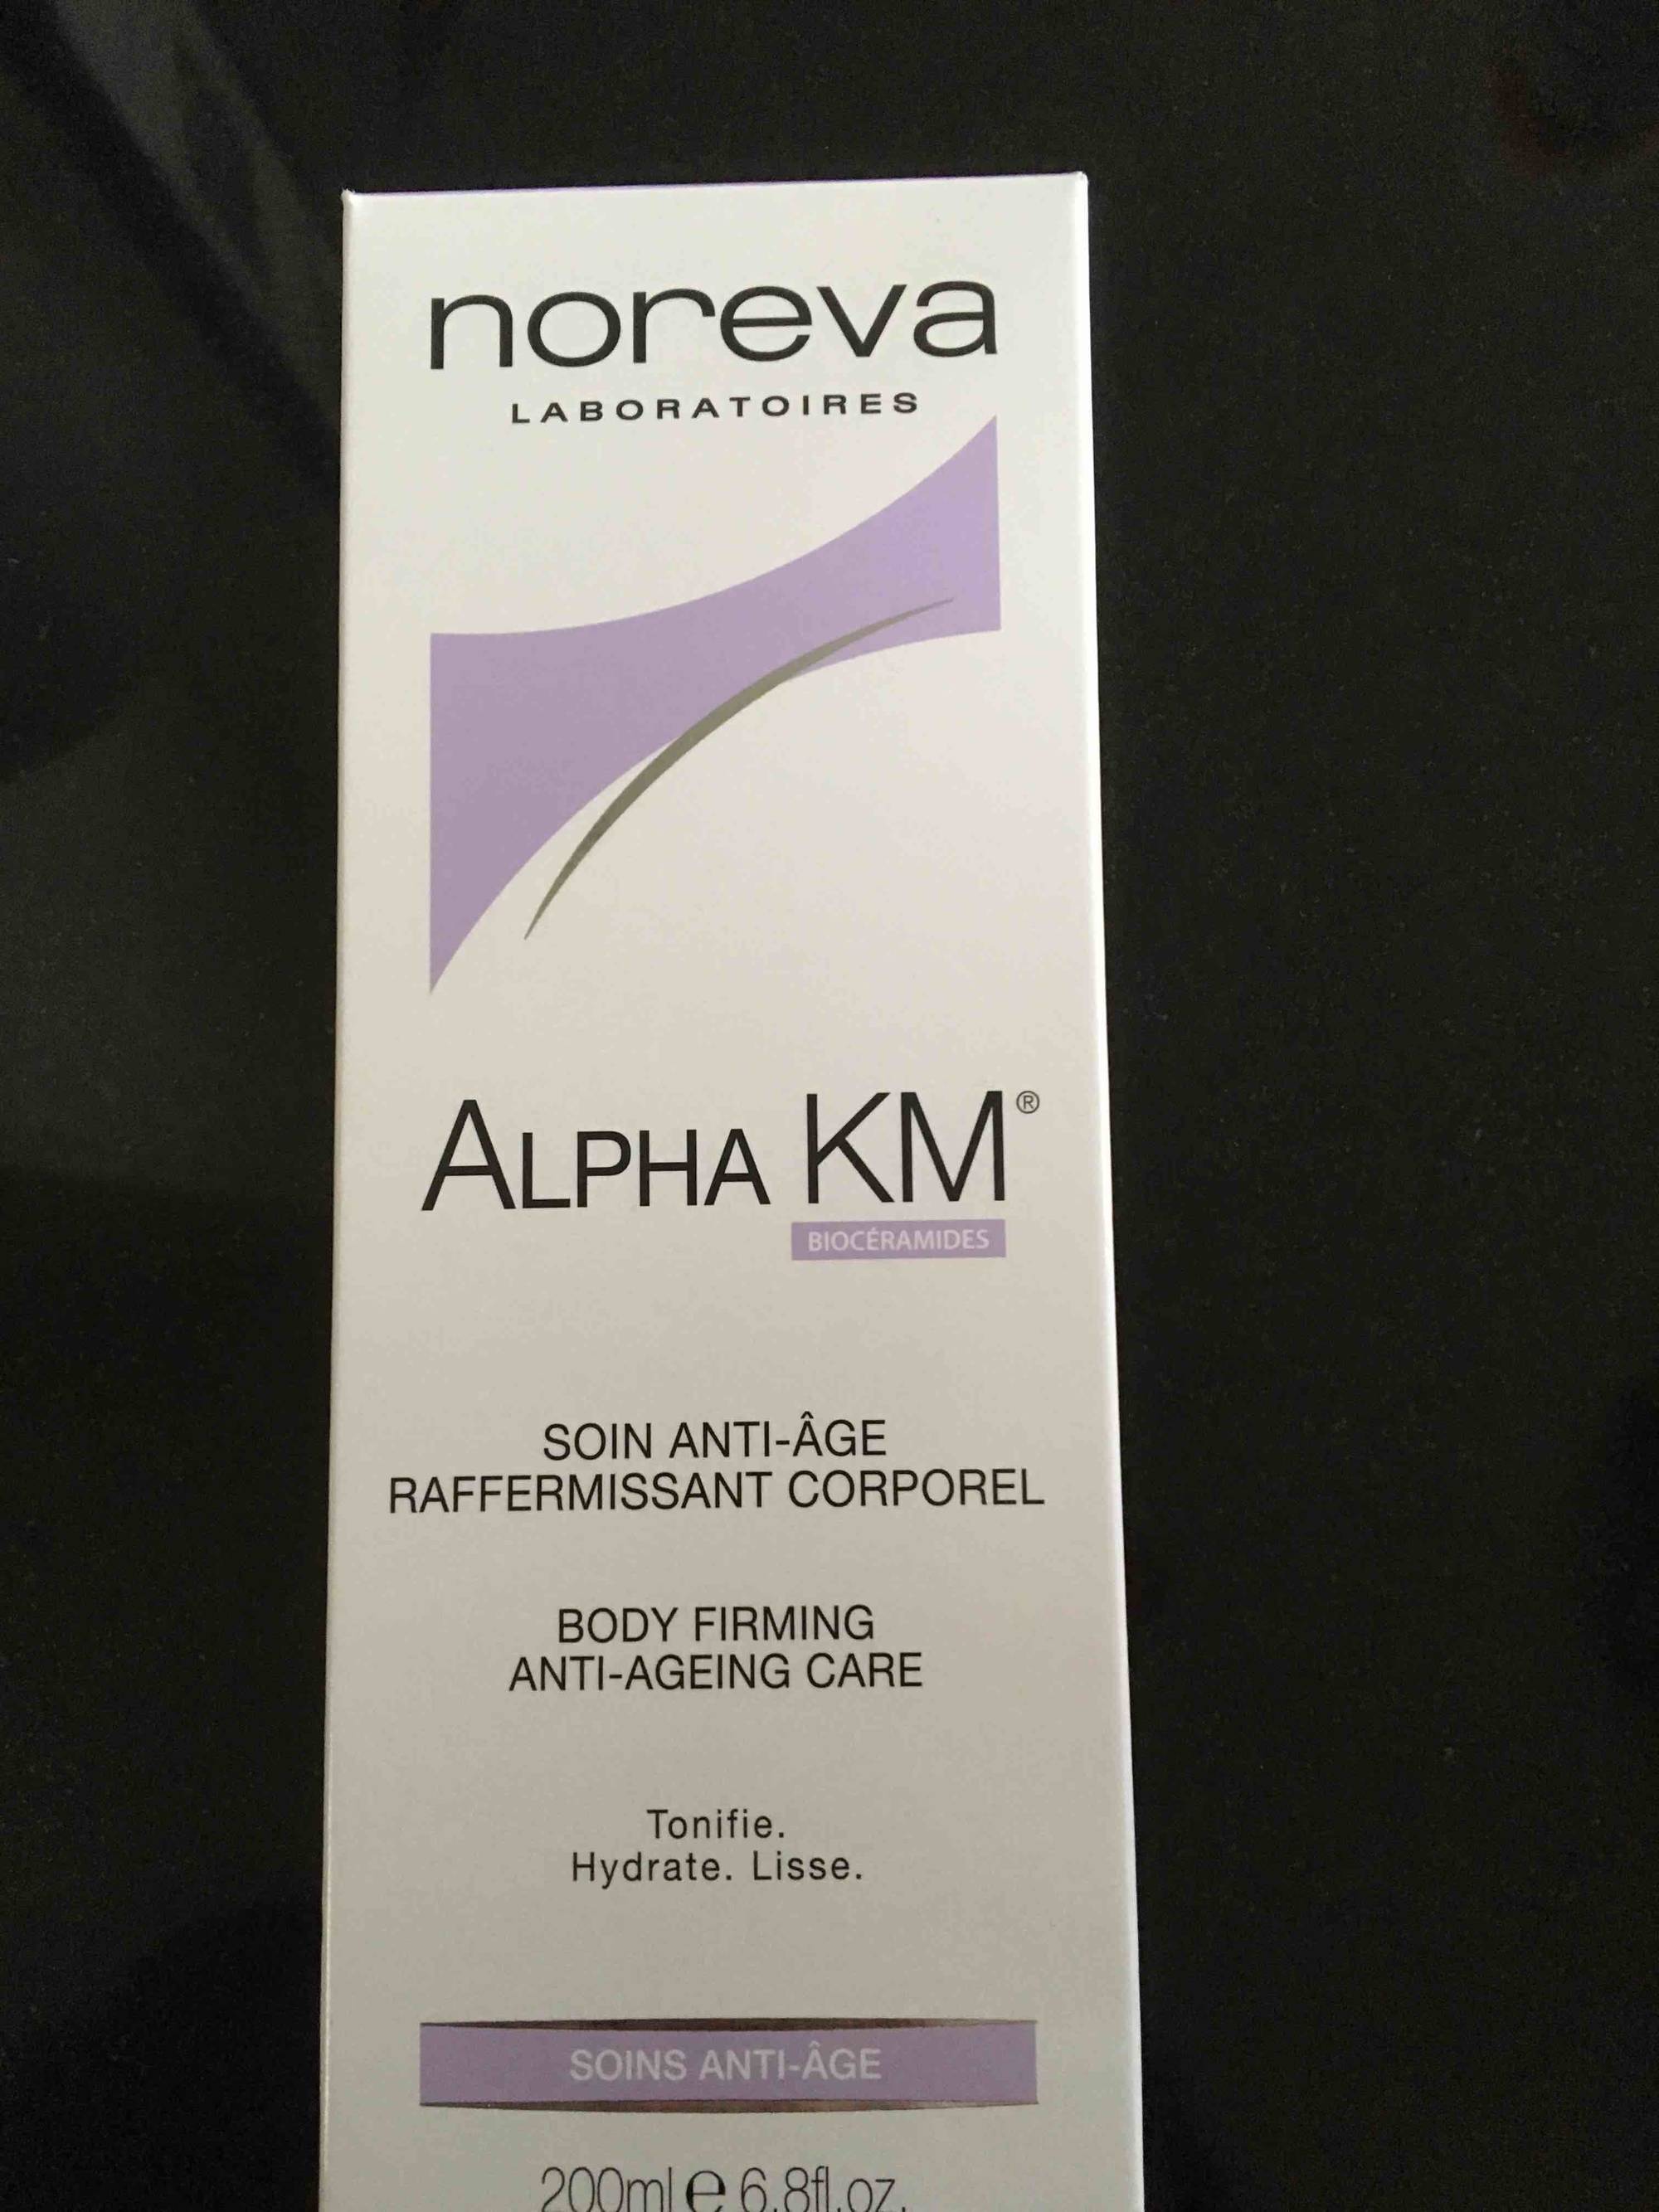 NOREVA - Alpha KM - Soin anti-âge raffermissant corporel